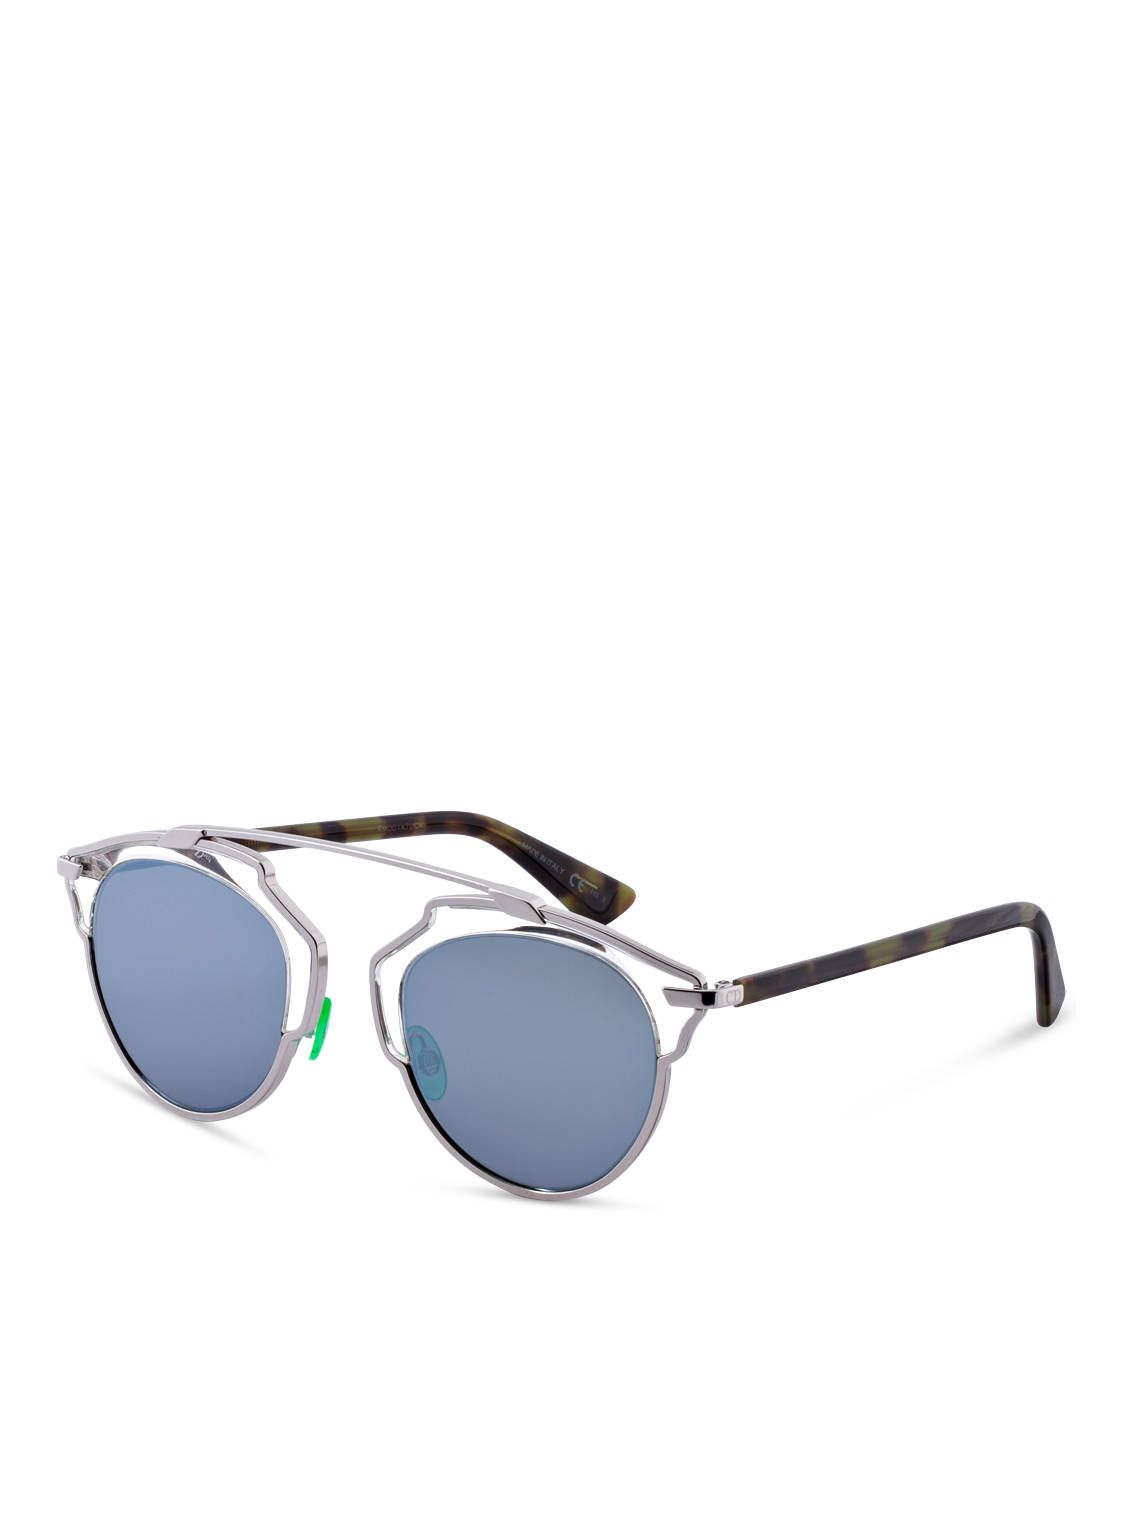 Dior Sunglasses Sonnenbrille DIOR SO REAL | Breuninger DE